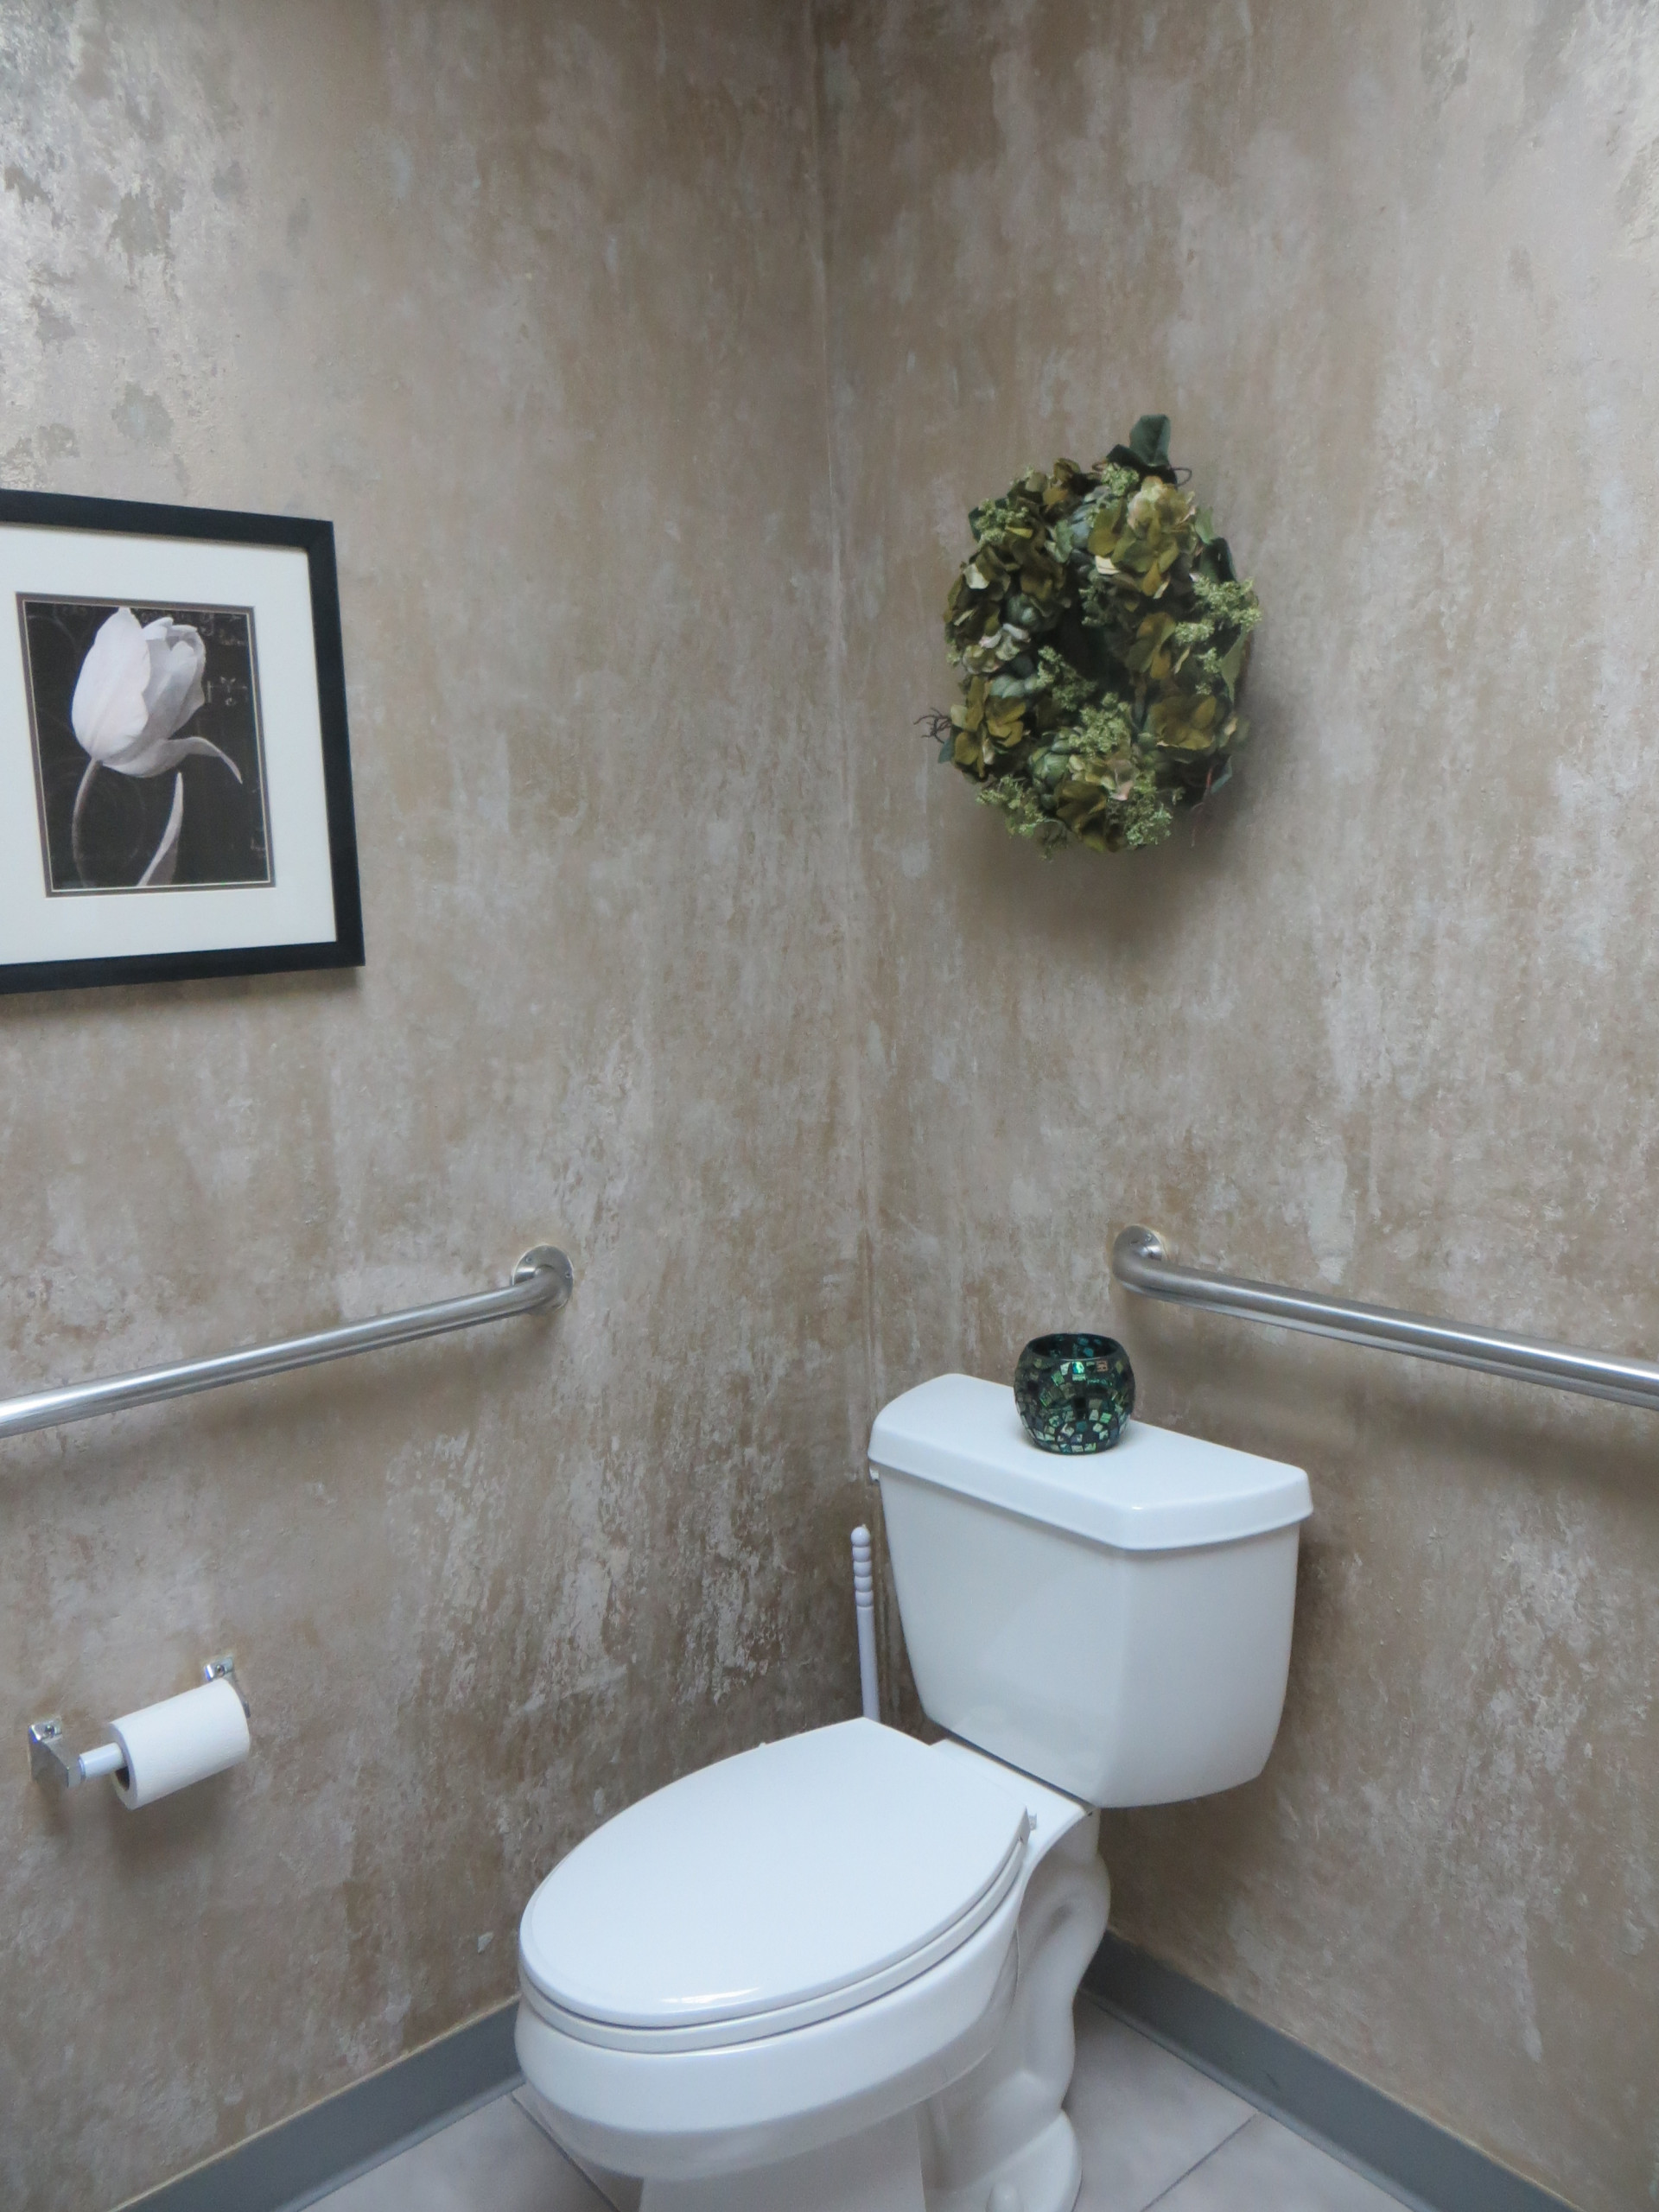 Linda's office bathroom - Contemporary - Powder Room - Boston - by Walls &  More | Houzz